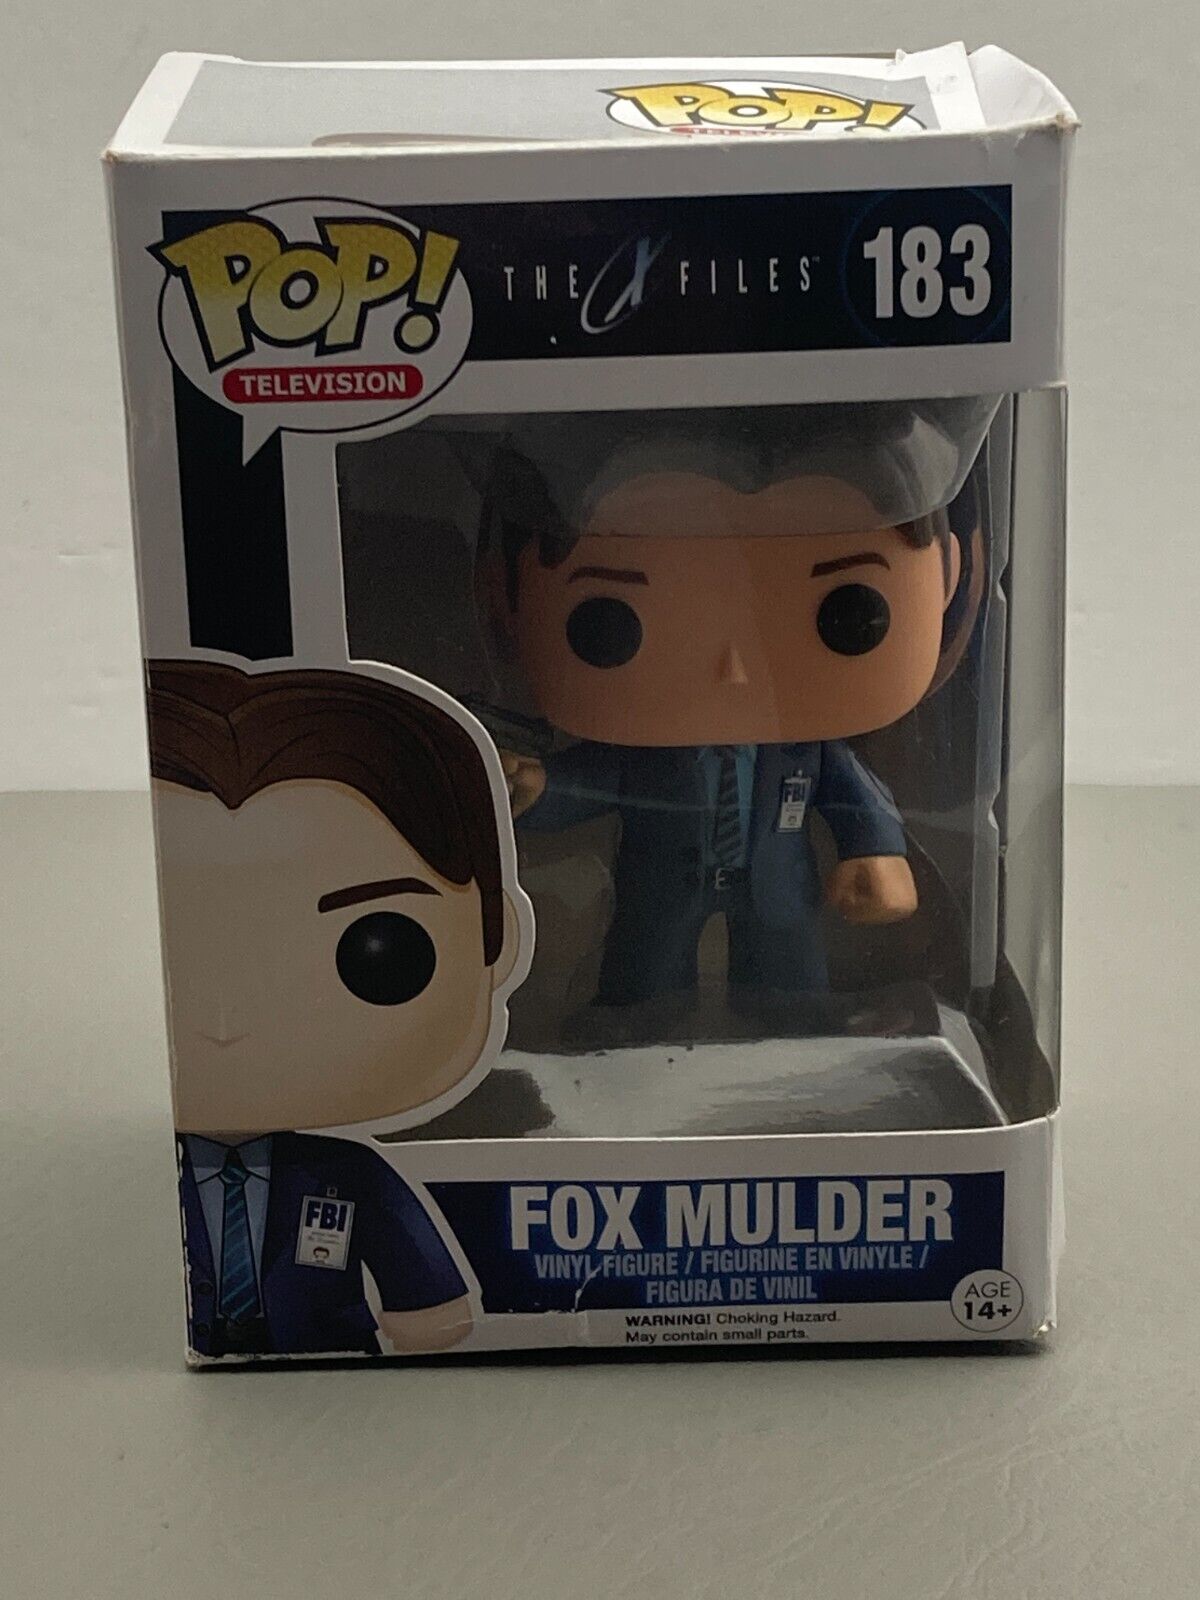 Funko Pop Television The X-Files Fox Mulder 183 Vinyl Figure See Photos New